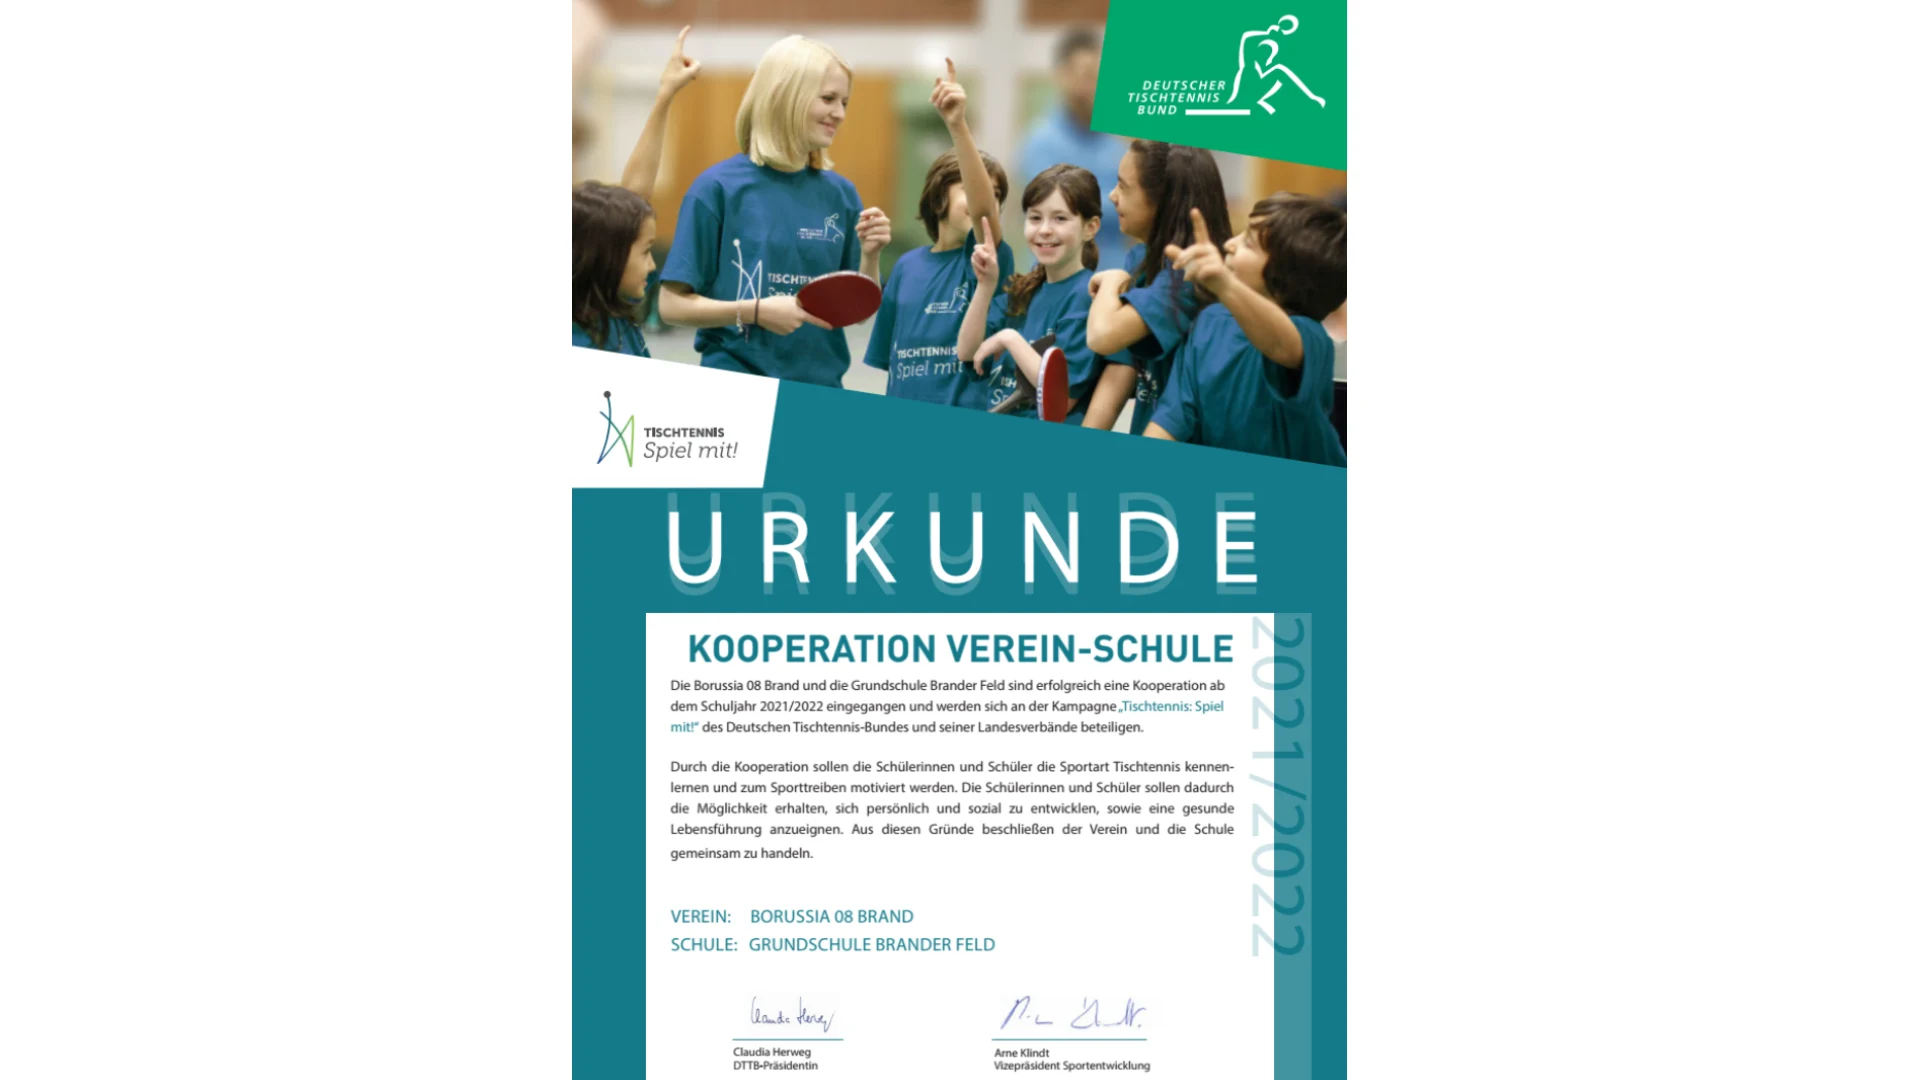 Urkunde_Kooperation_Verein_Schule_BorussiaBrand